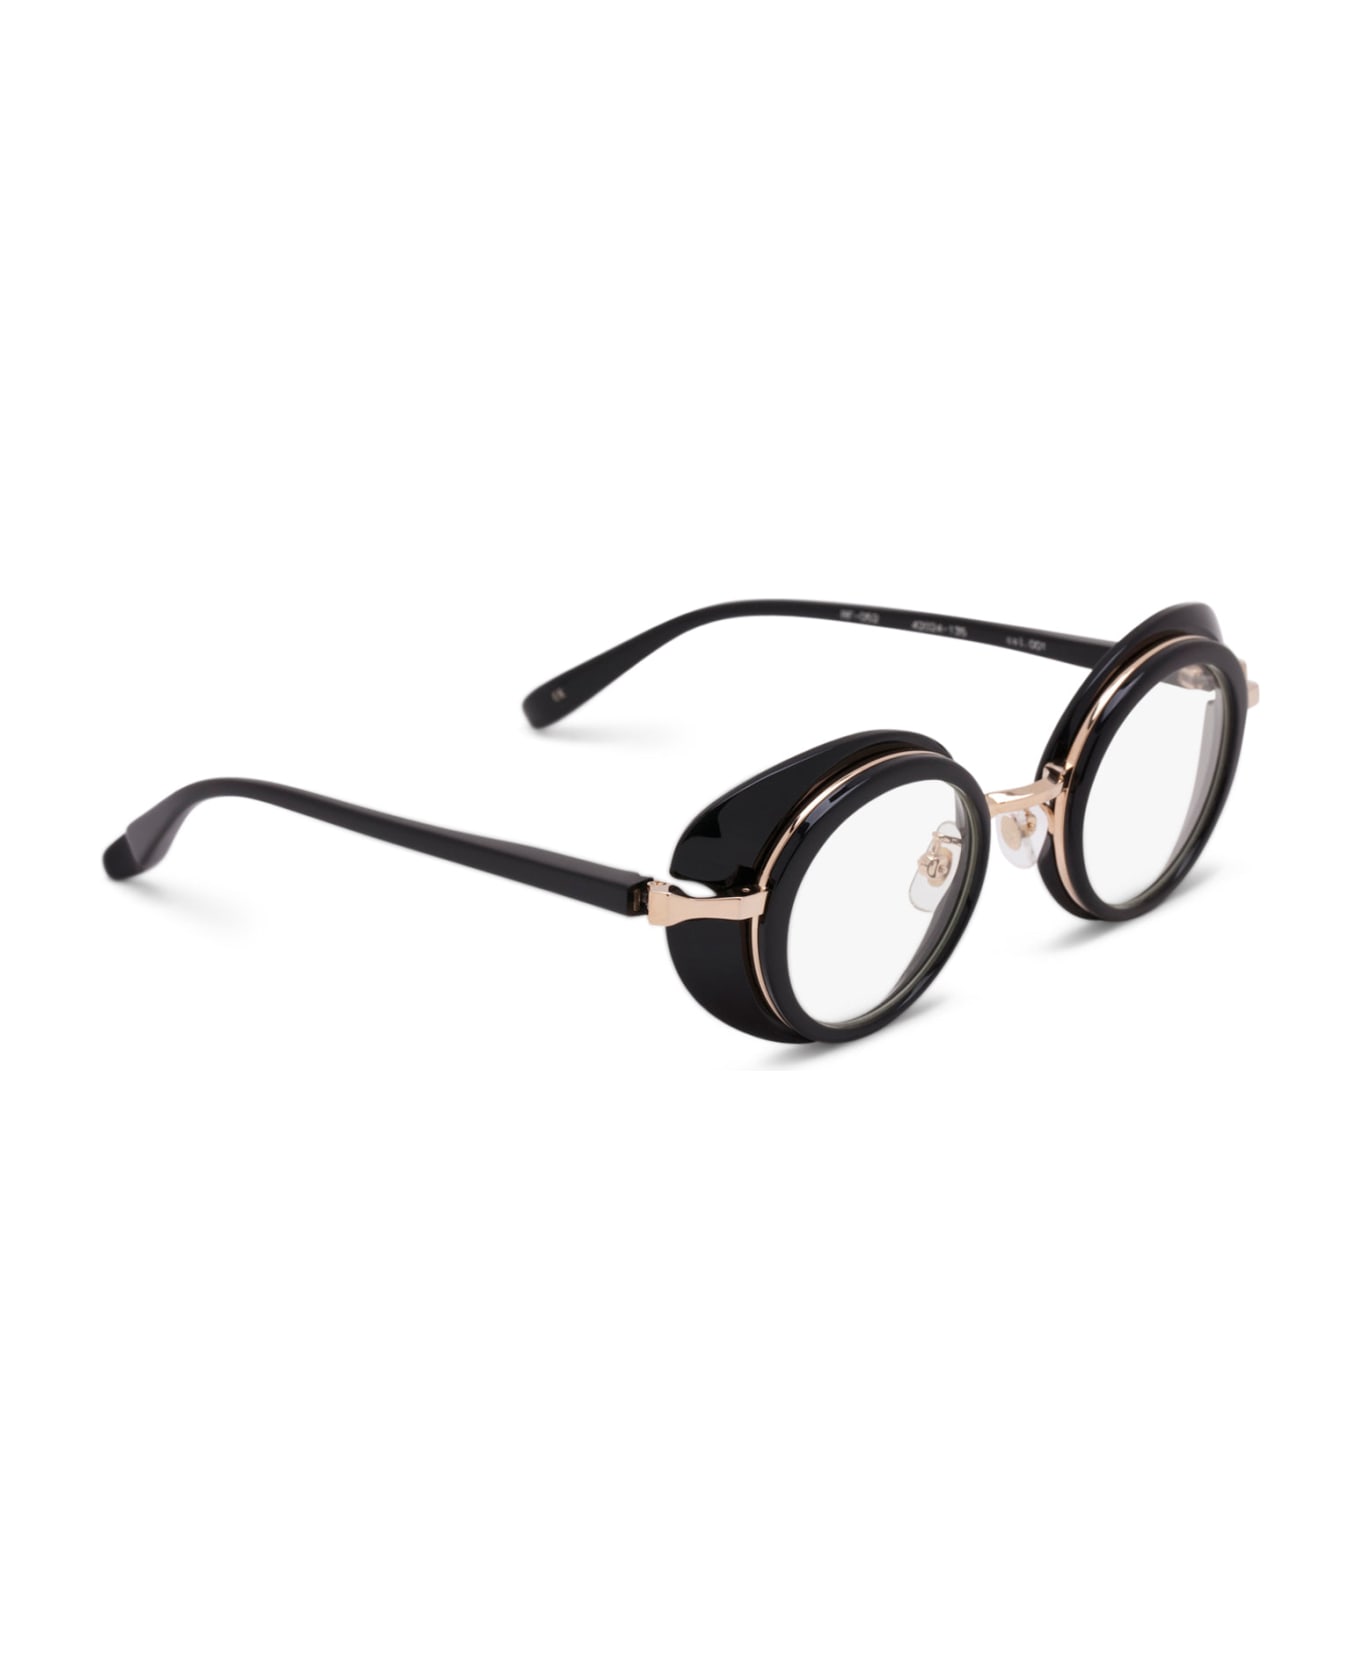 FACTORY900 Rf 052-001 Glasses - Black/gold アイウェア